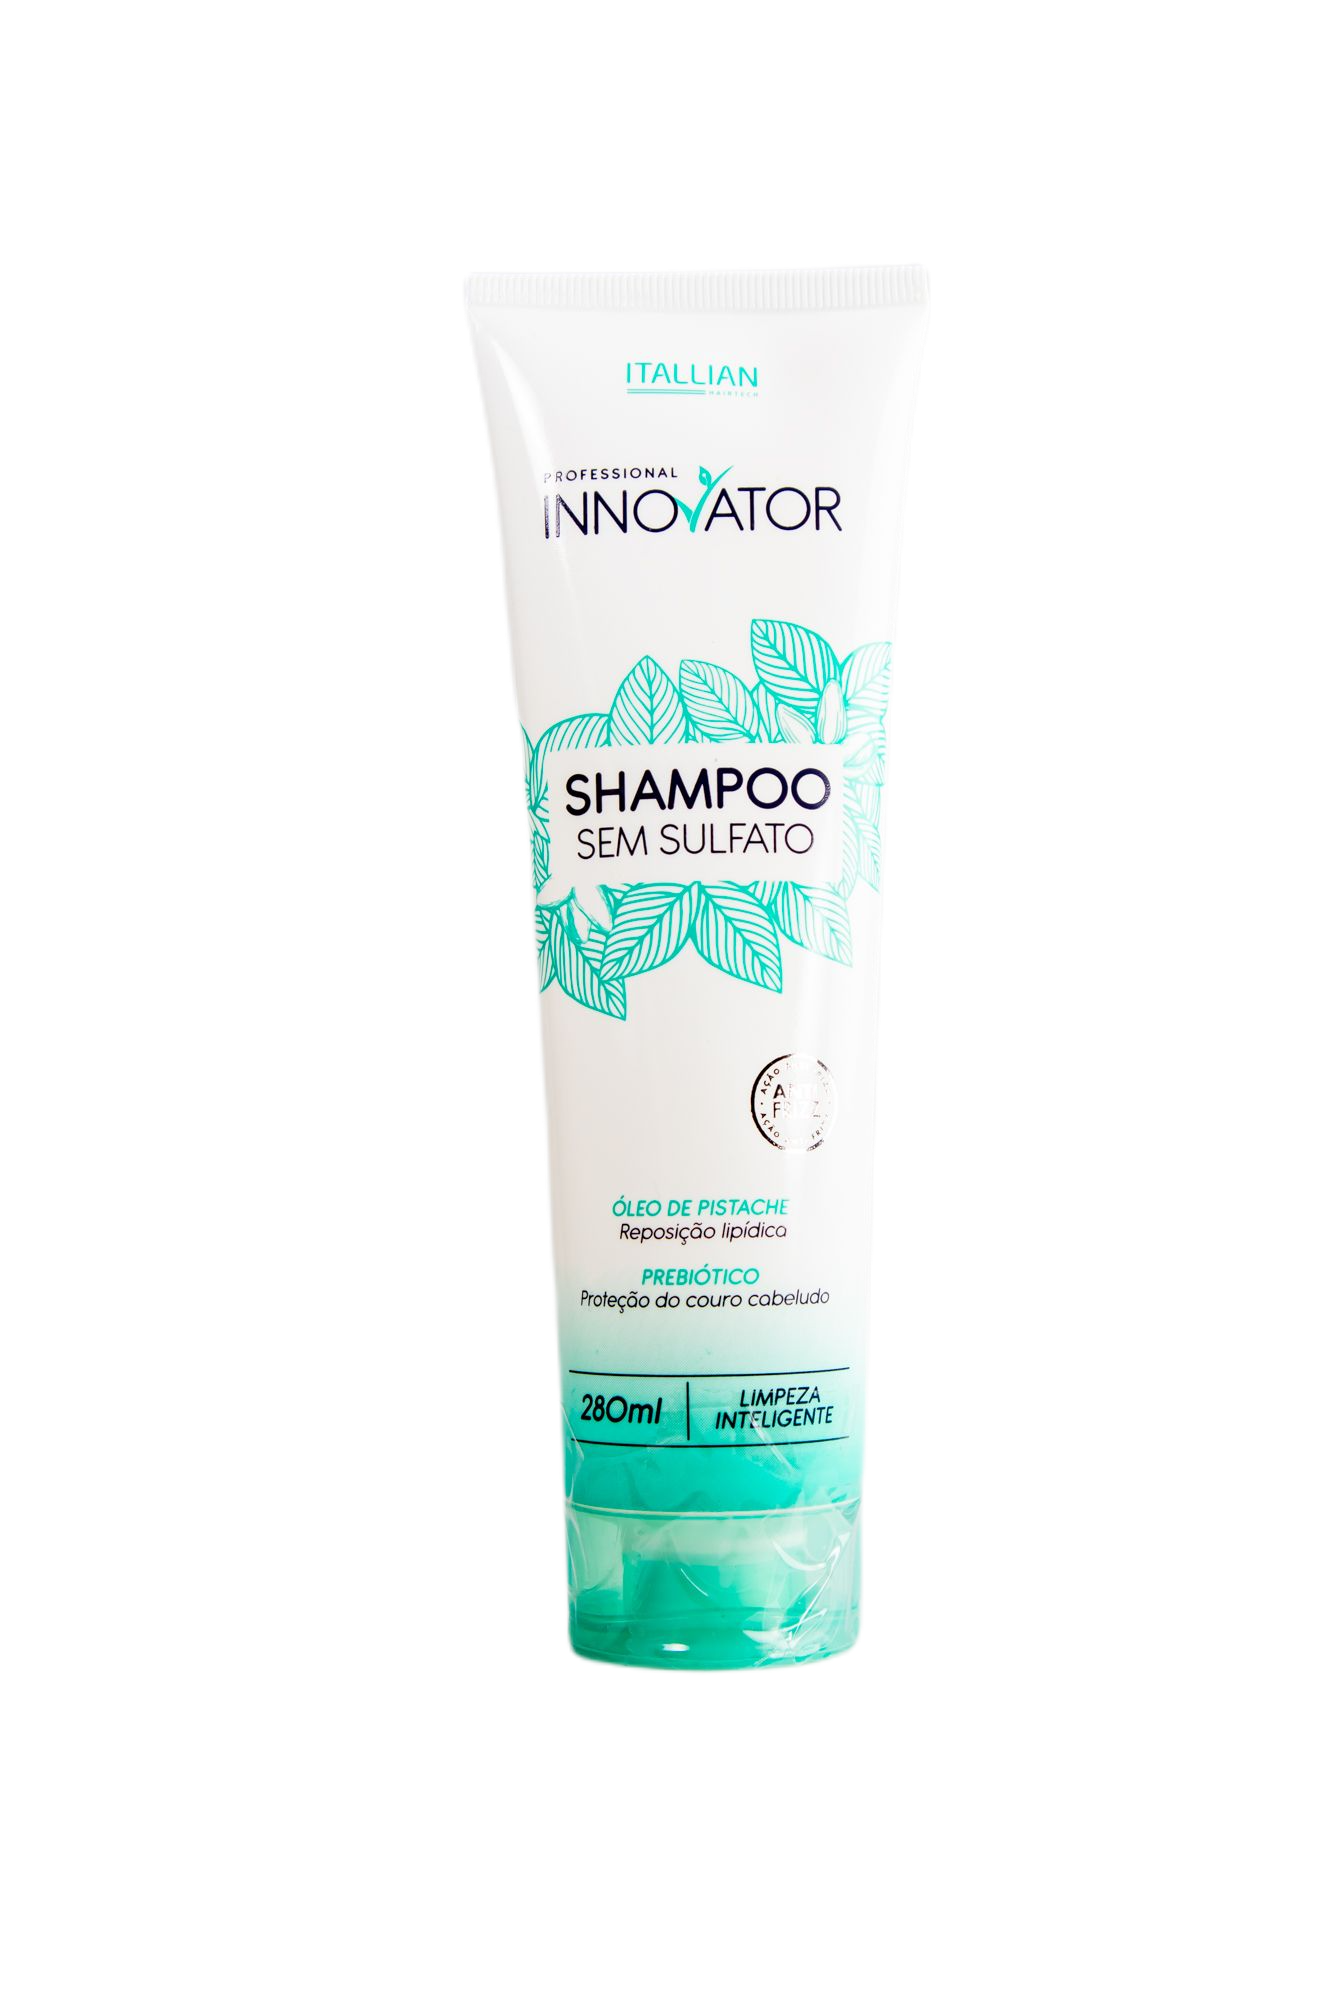 Itallian Hair Tech Brazilian Keratin Treatment Pistachio Innovator Sulfate Free Revitalizing Shampoo 280ml - Itallian Hair Tech